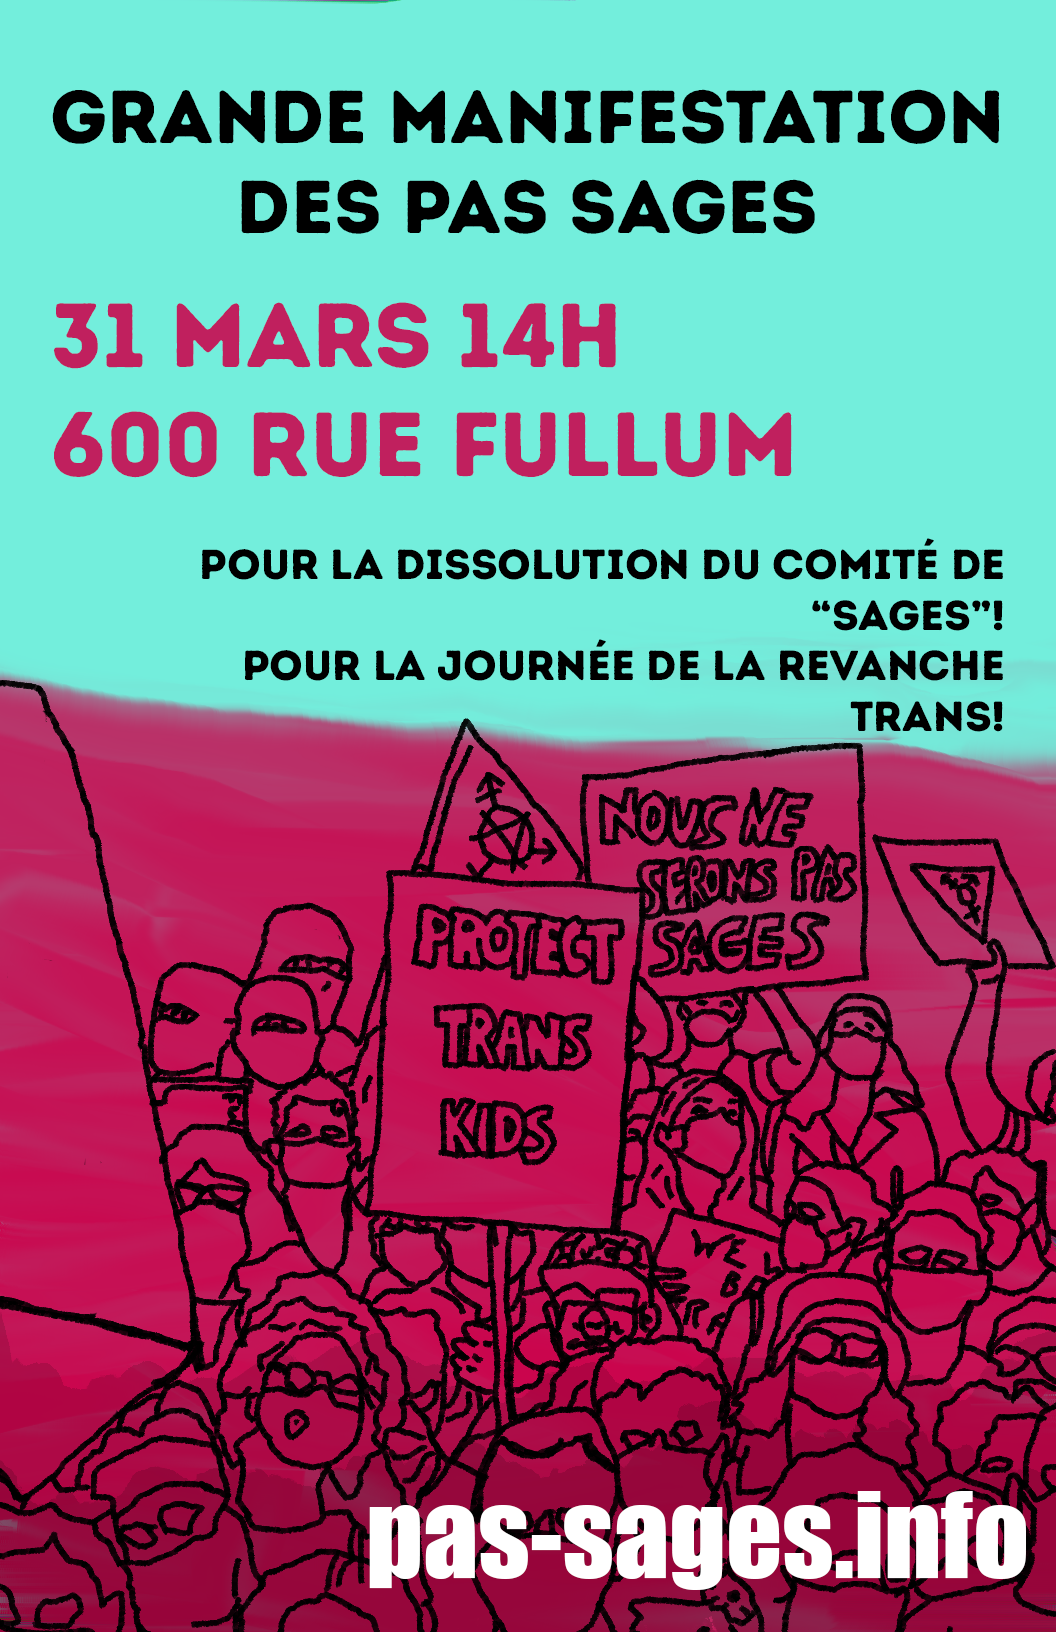 Affiche : Grande manifestation des pas sages. 31 mars 14h, 600 rue fullum. pas-sages.info